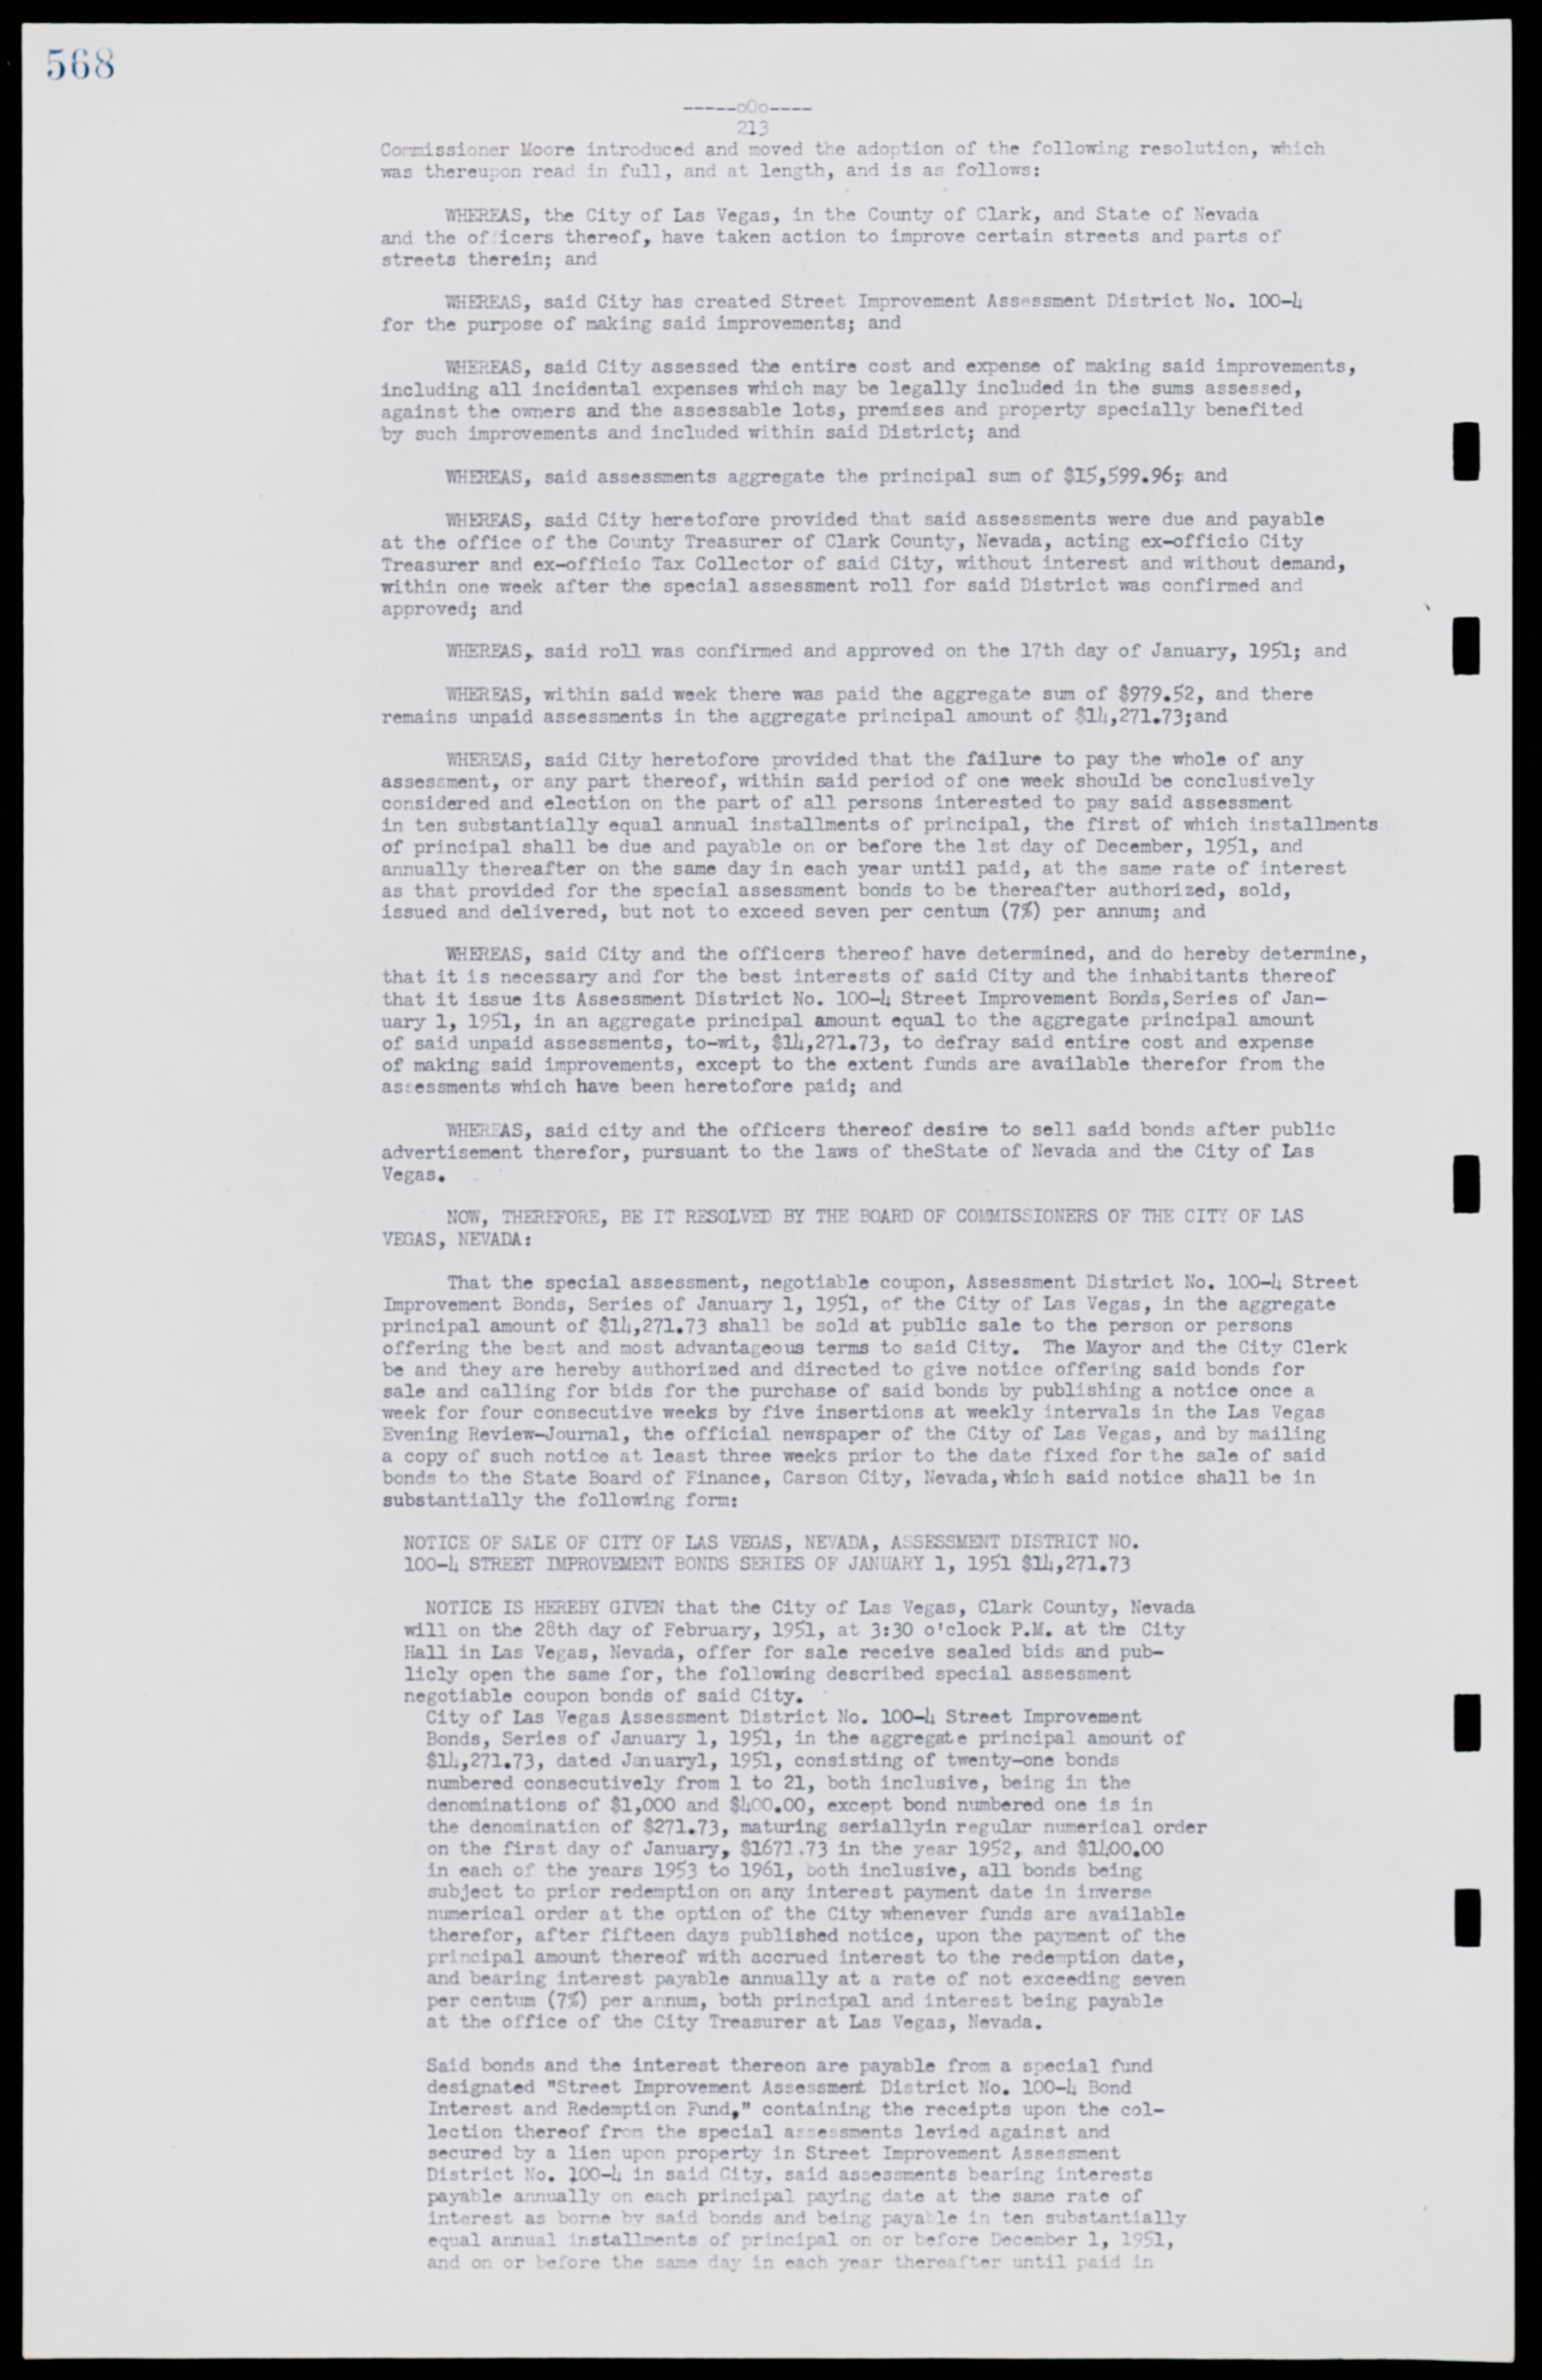 Las Vegas City Commission Minutes, January 7, 1947 to October 26, 1949, lvc000006-599